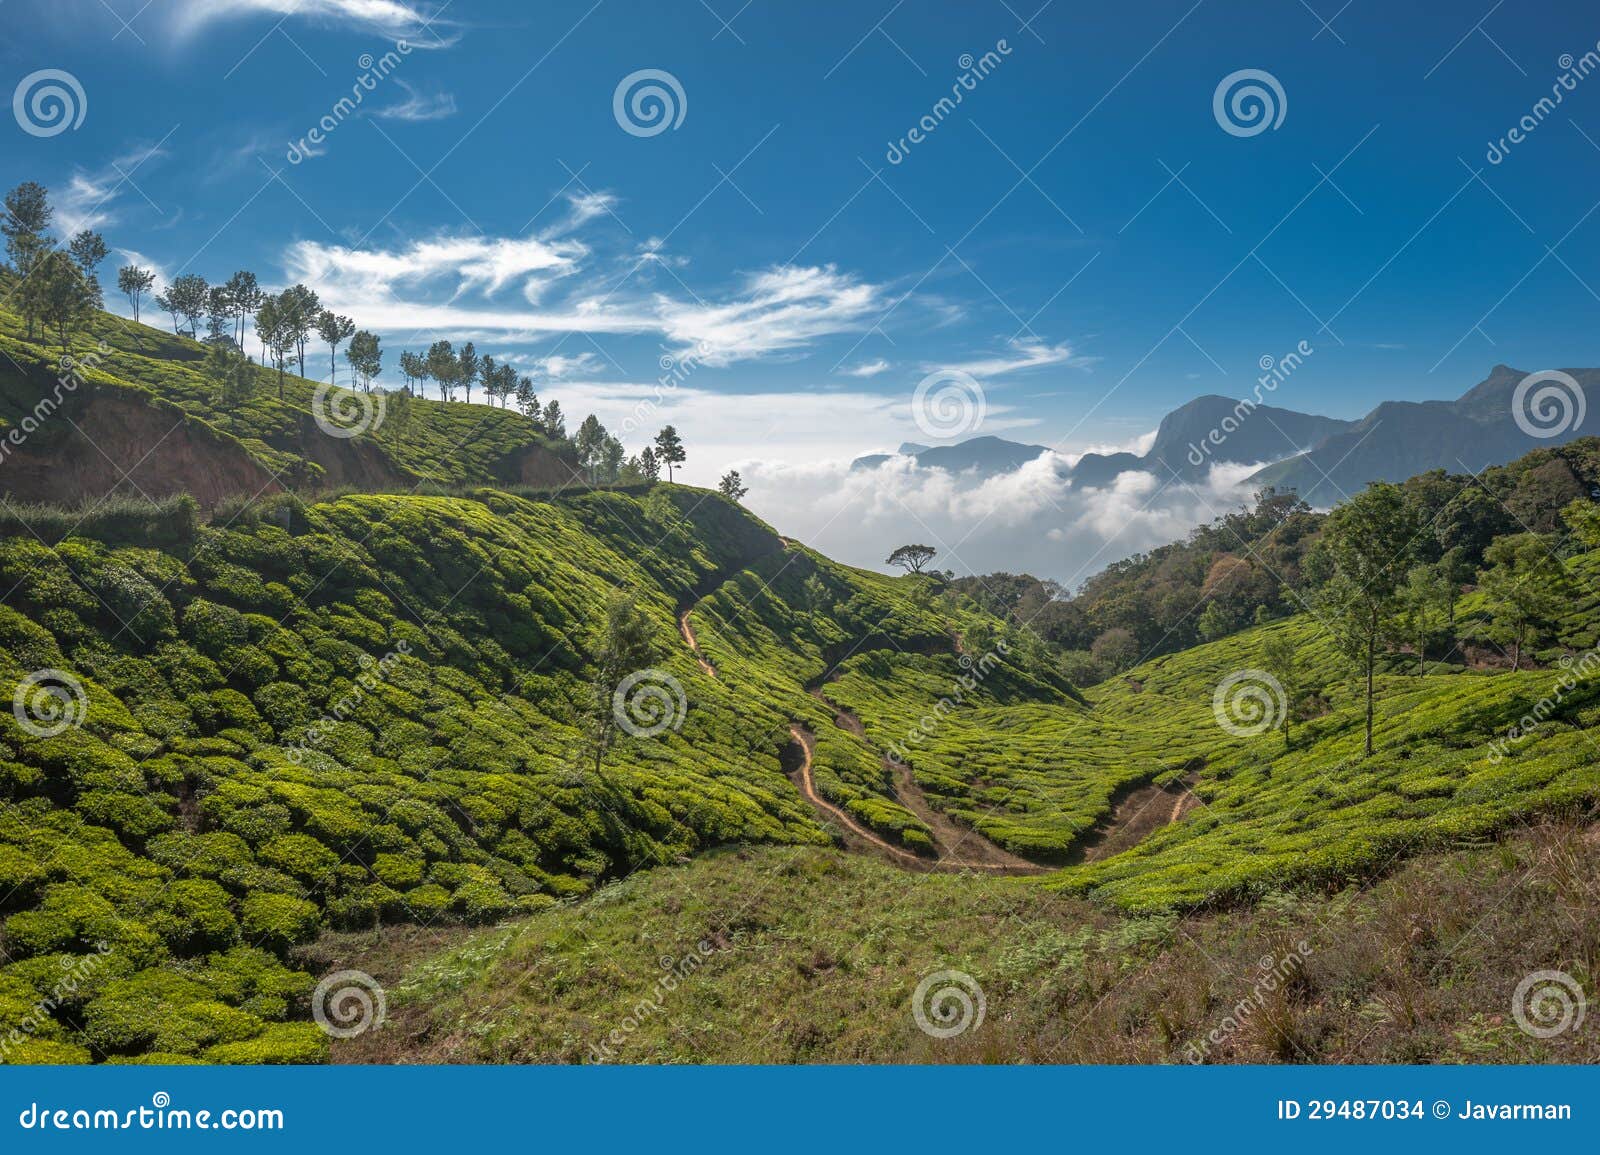 tea plantations in munnar, kerala, india